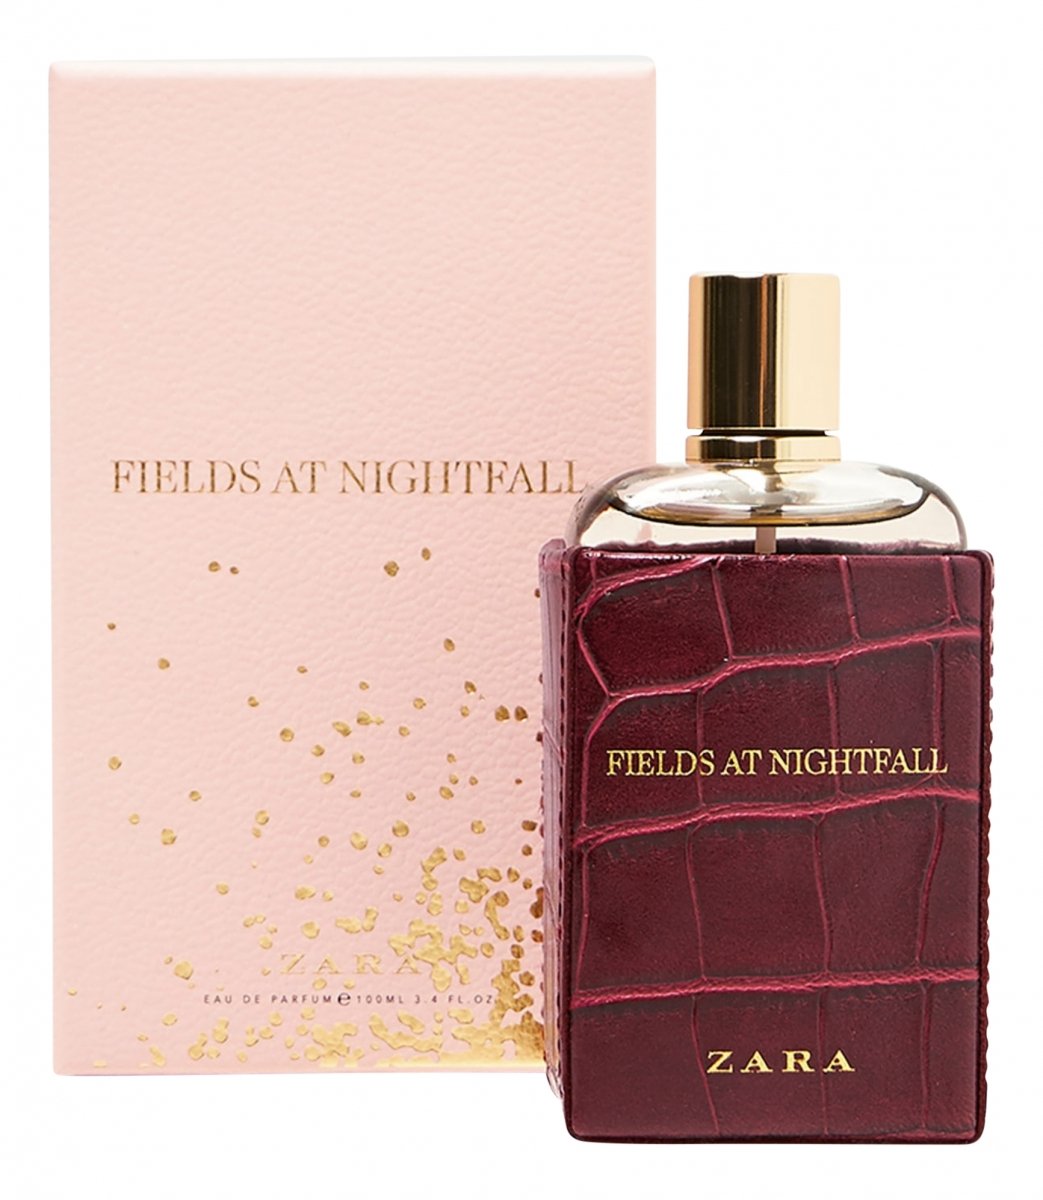 Zara Fields at Nightfall